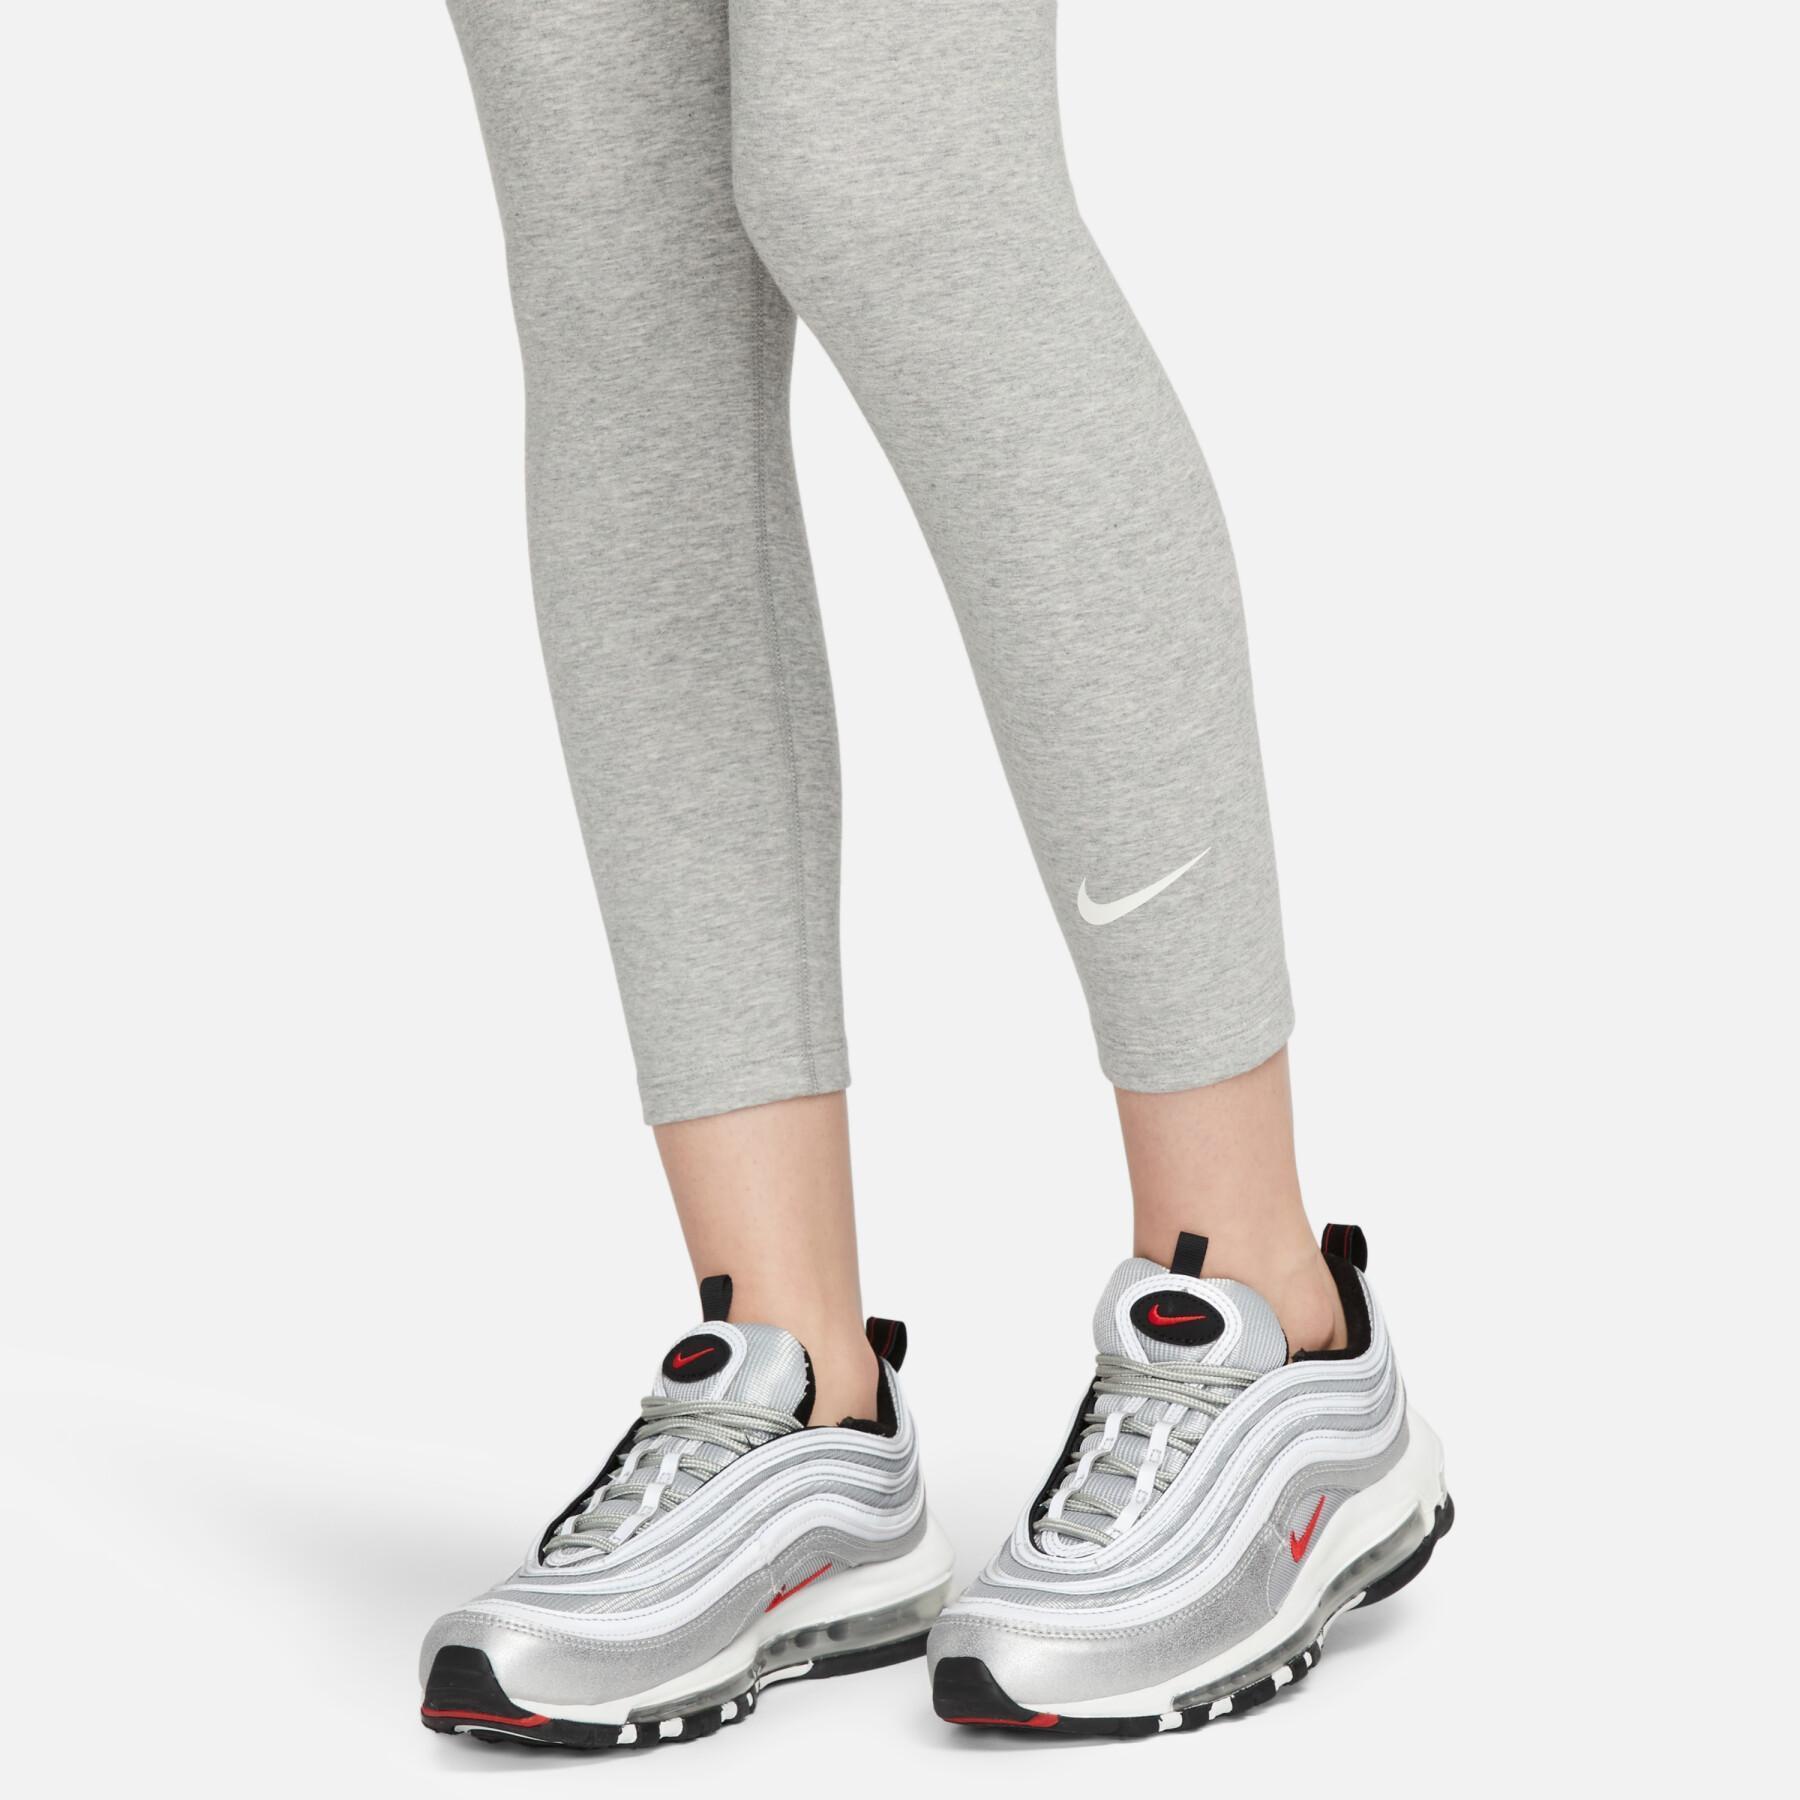 Leggings 7/8 mit hoher Taille, Damen Nike Classic LBR